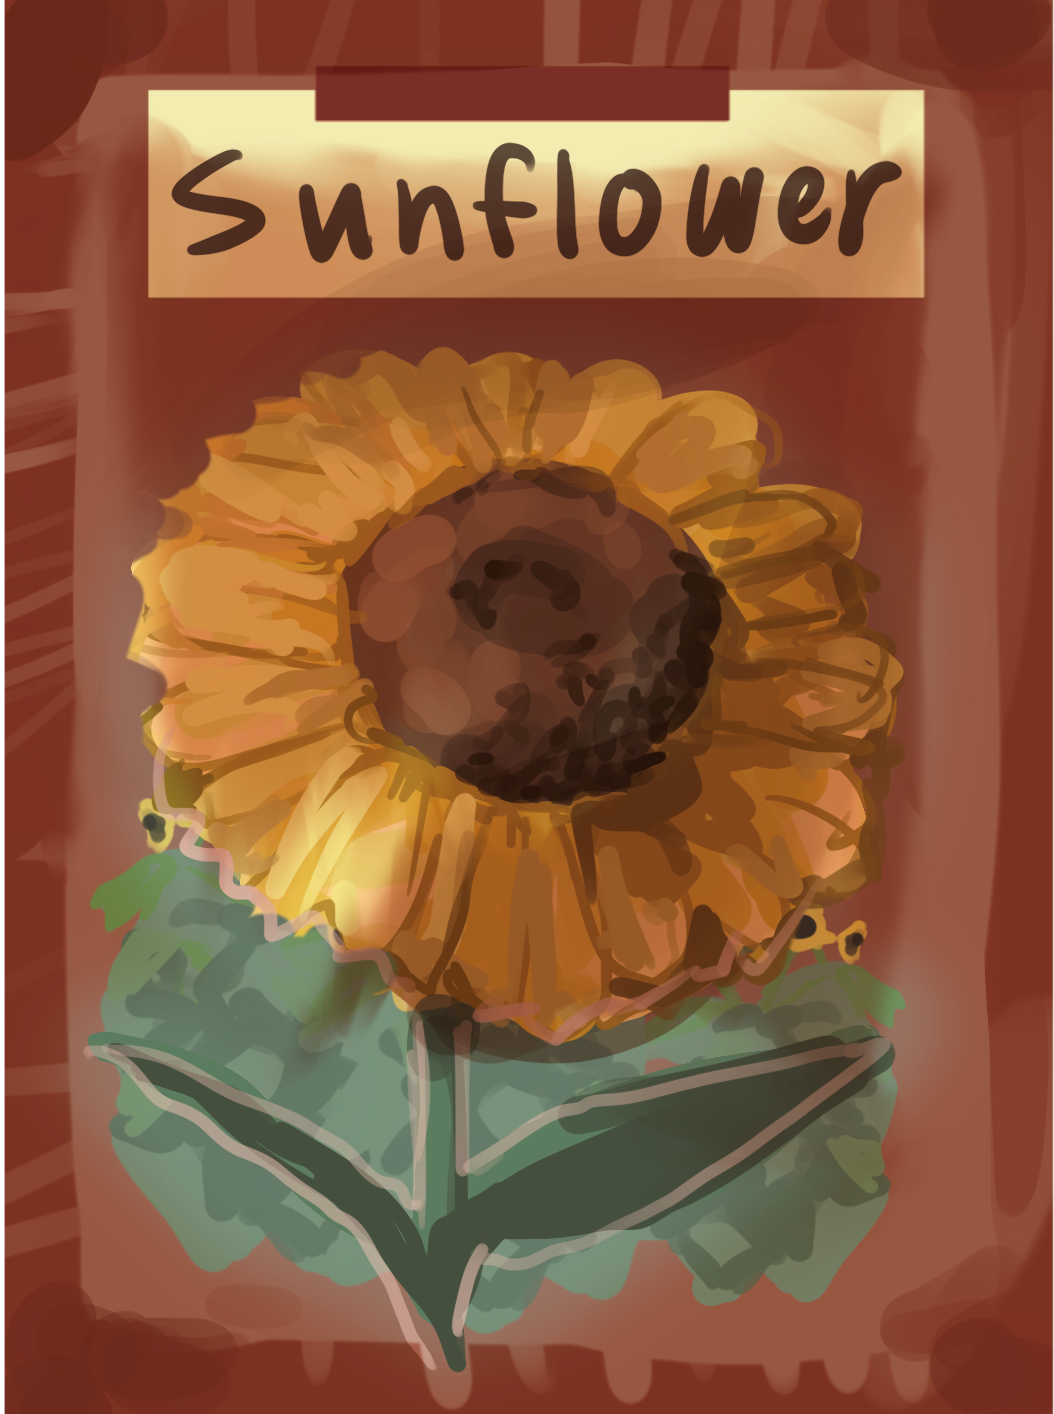 sunflower seed